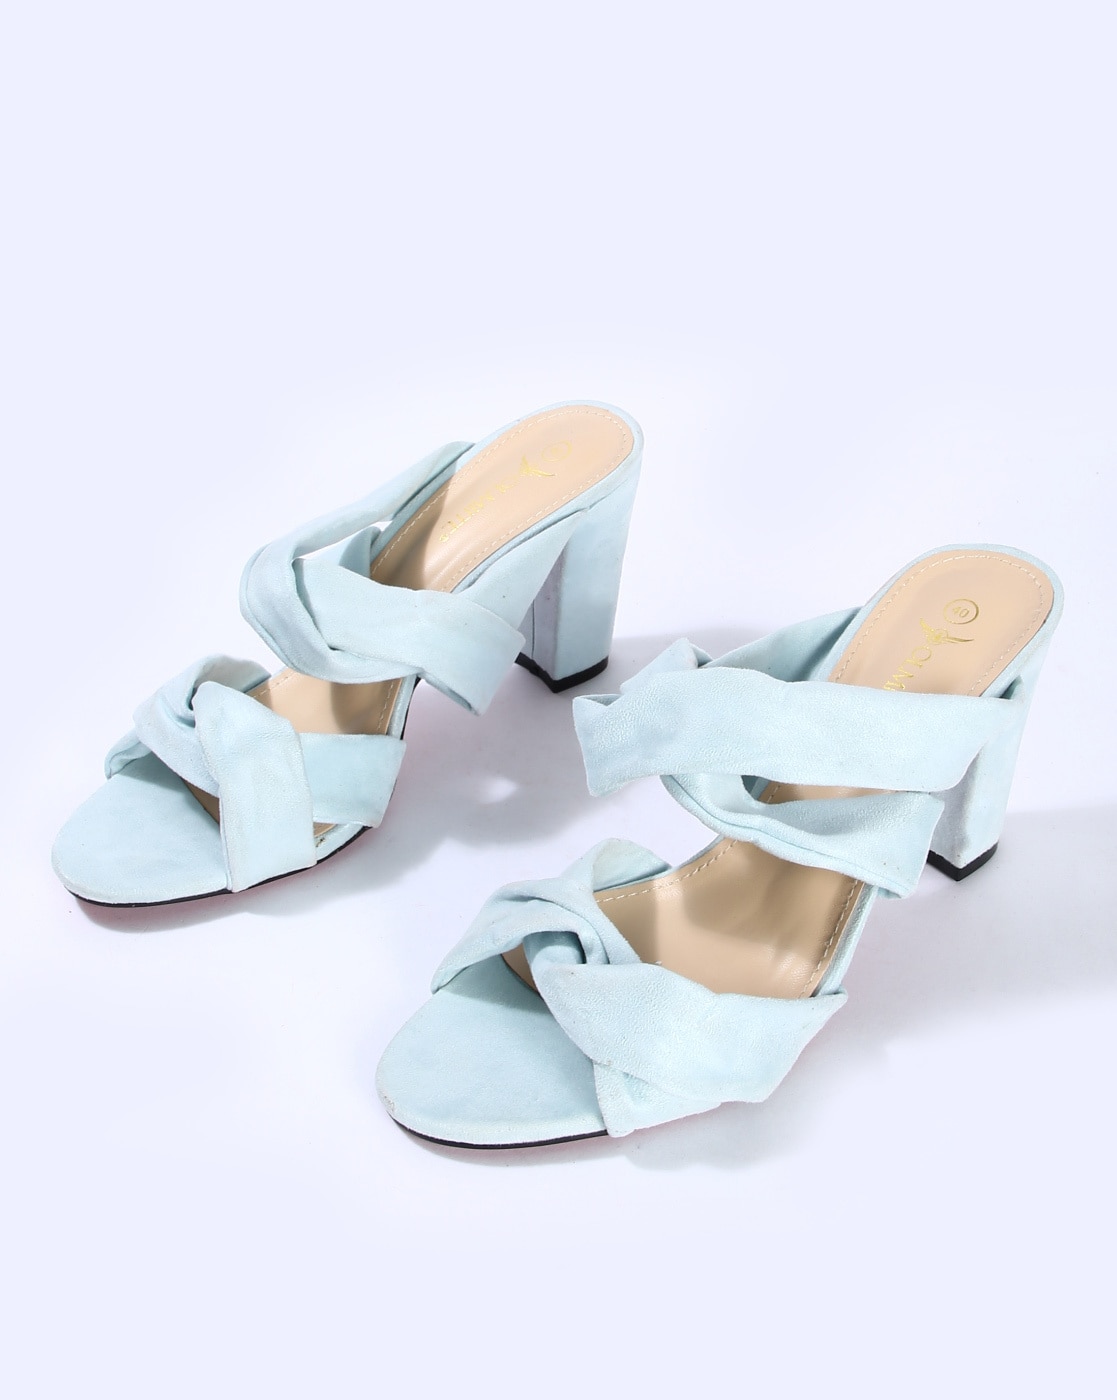 light blue heels for women